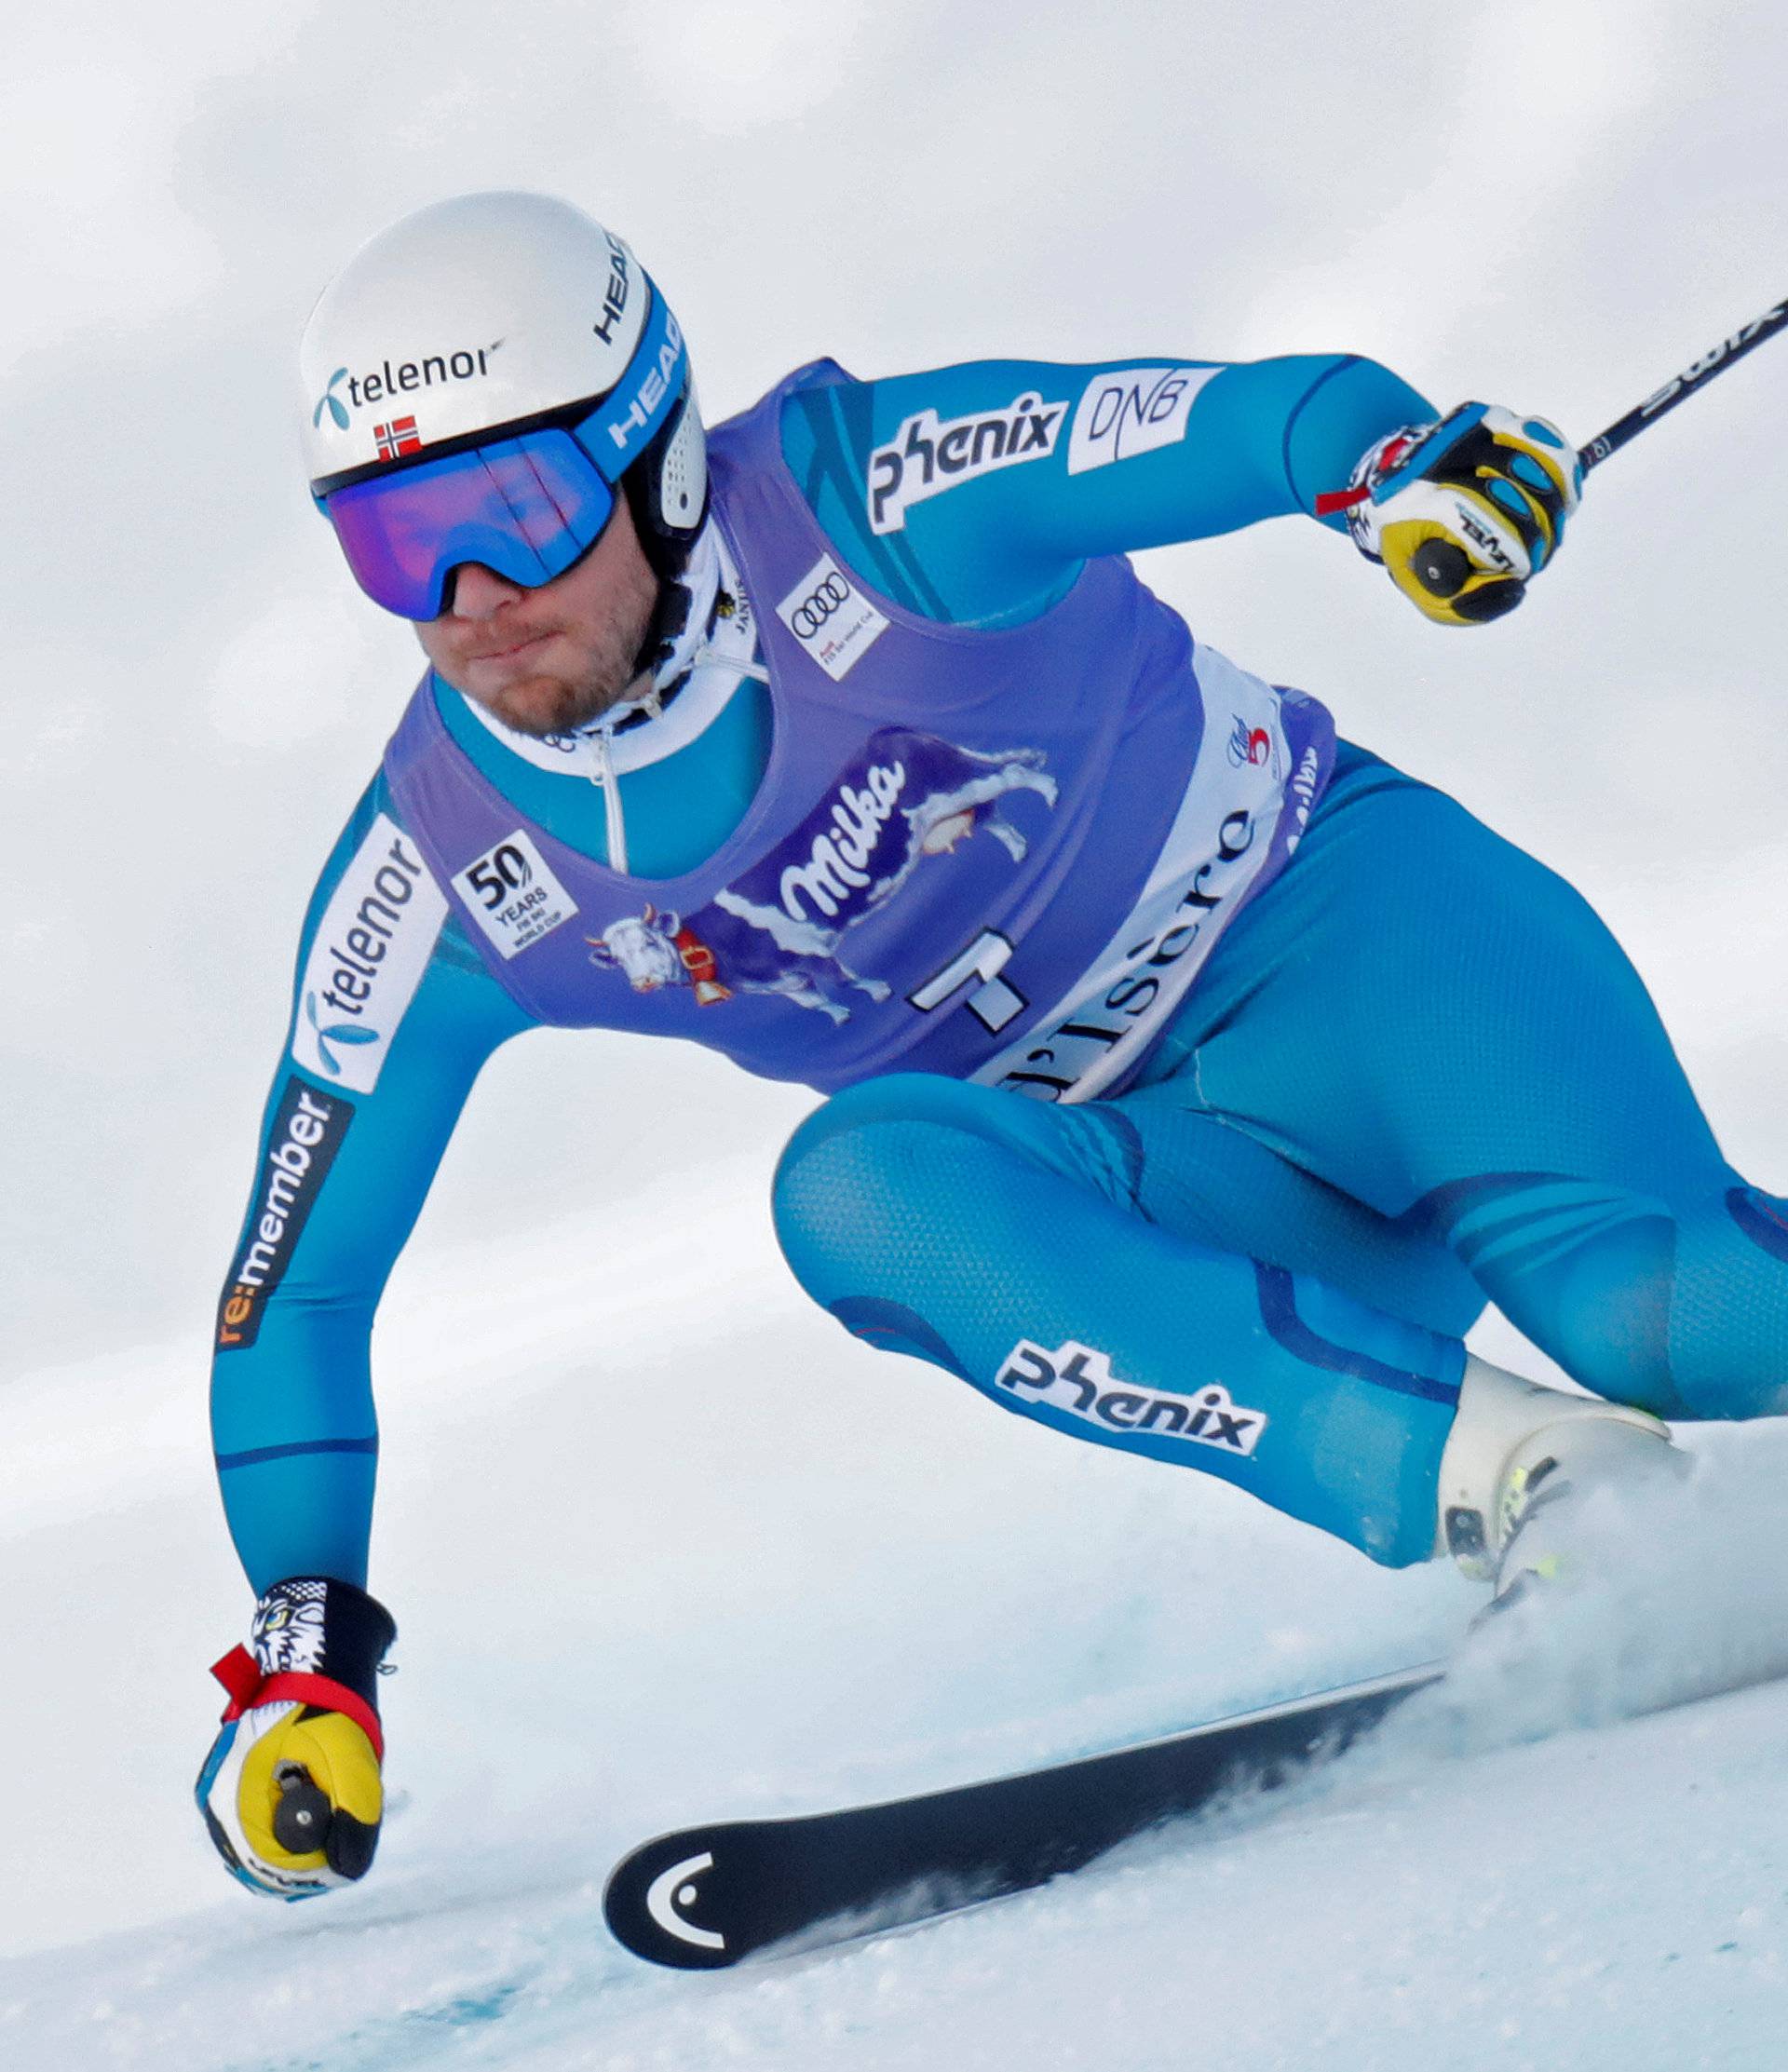 Alpine Skiing - FIS Alpine Skiing World Cup - Super G Men